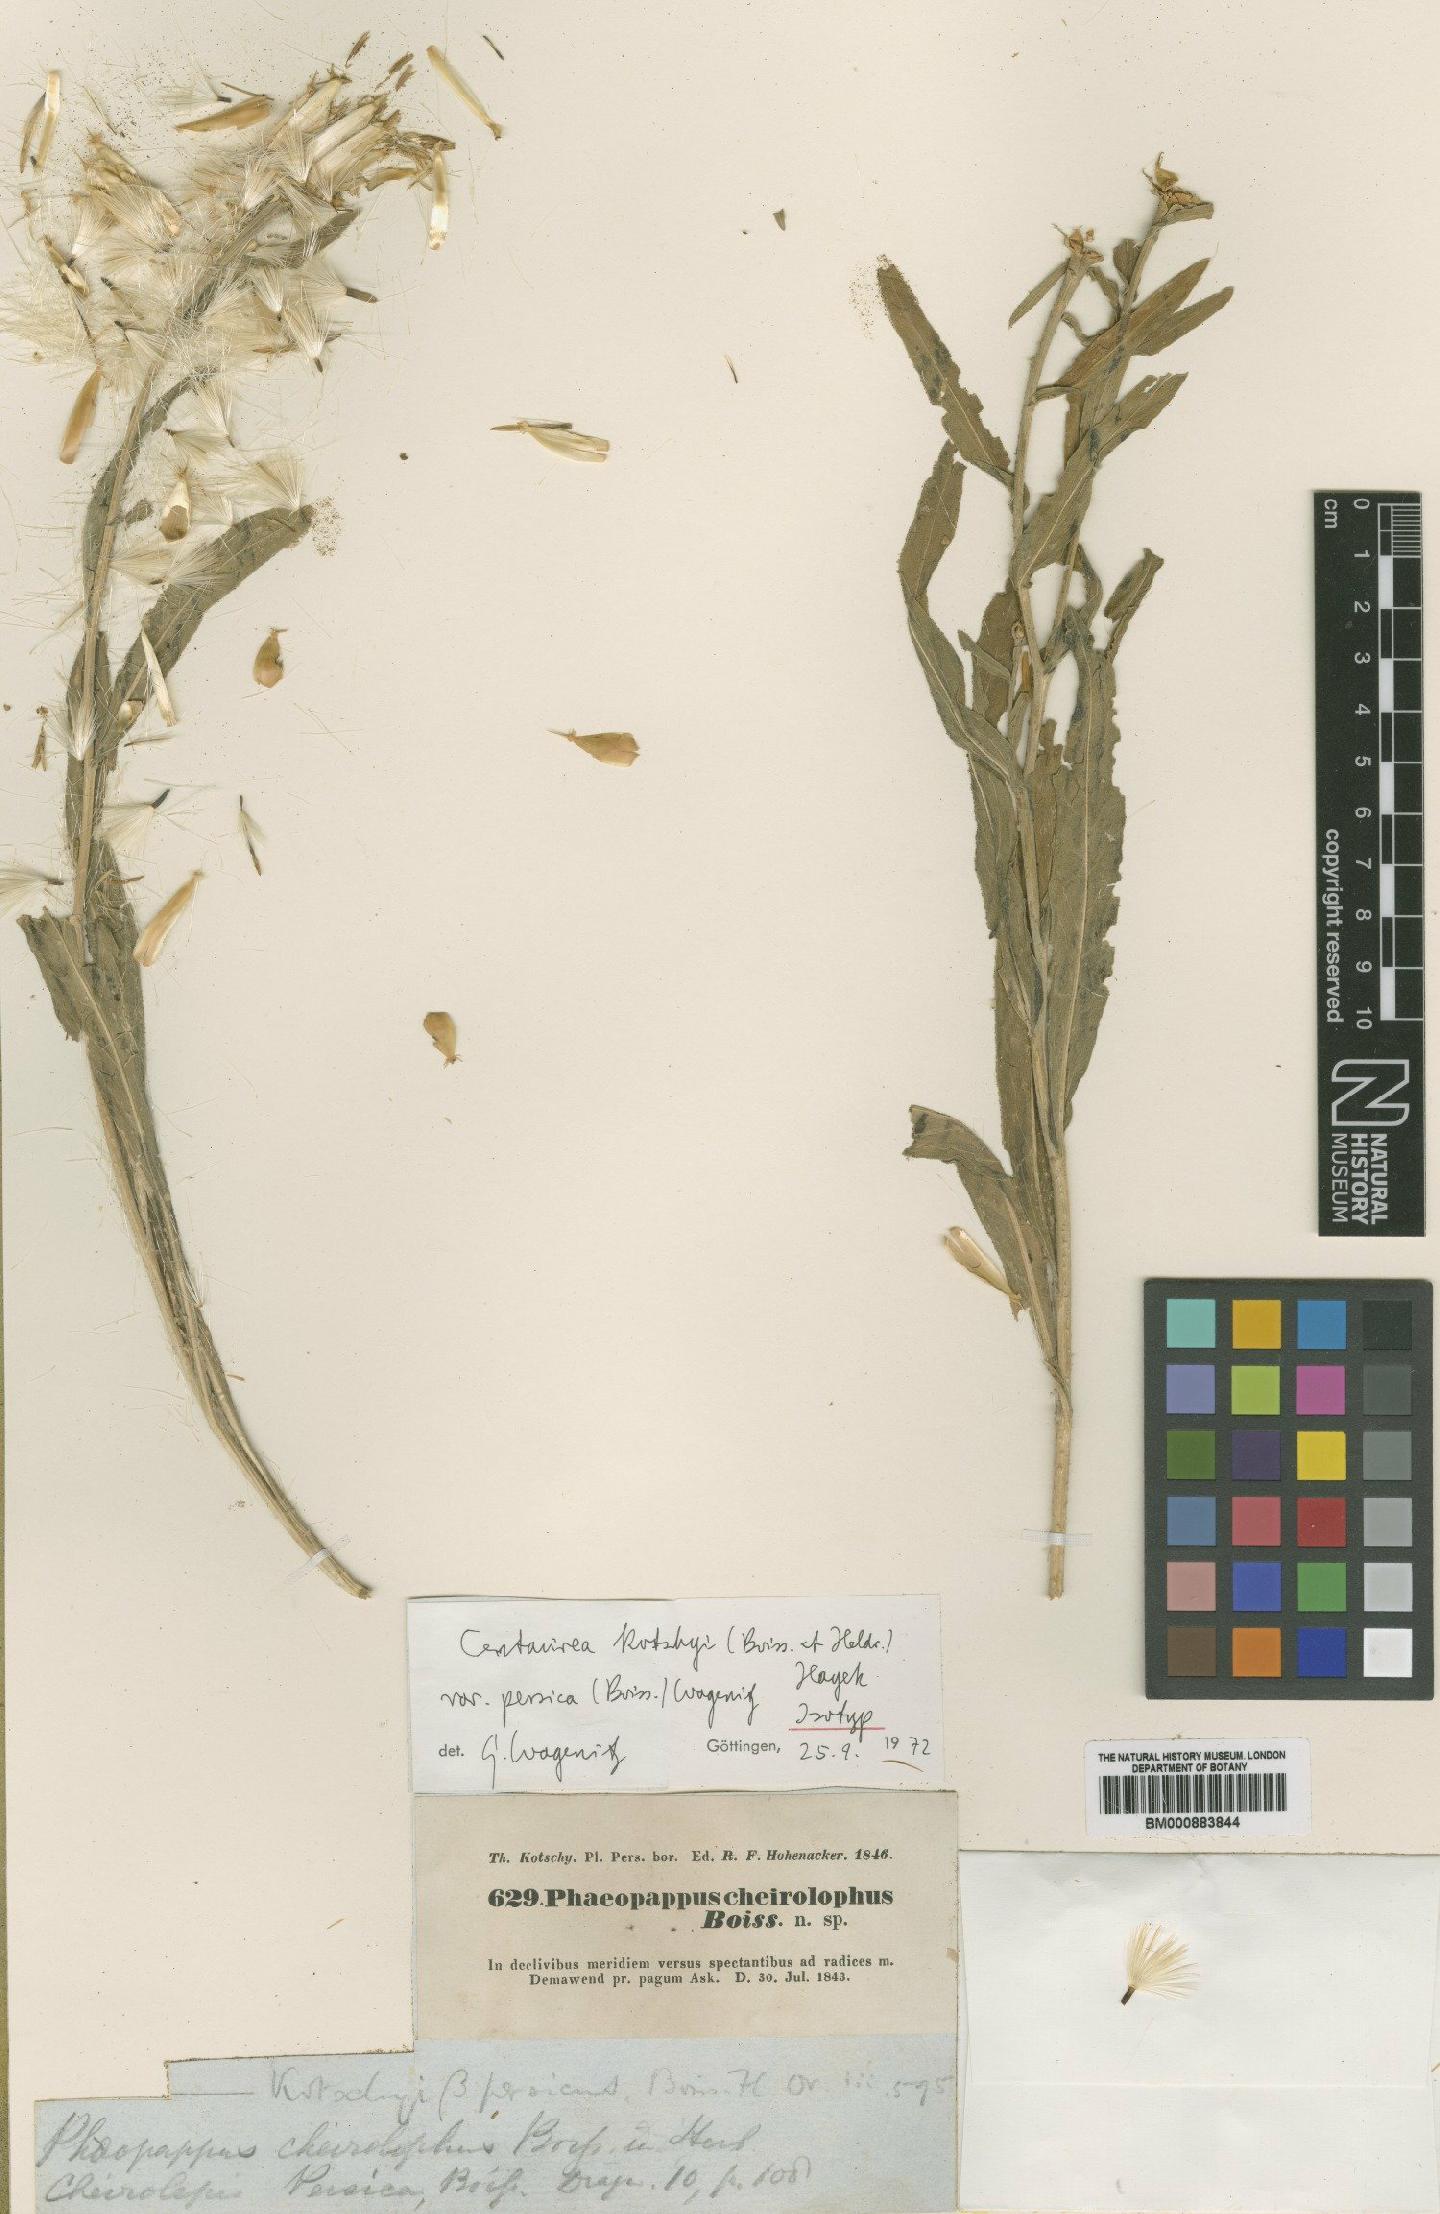 To NHMUK collection (Centaurea kotschyi var. persica (Boiss) Wagenitz; Isolectotype; NHMUK:ecatalogue:4993776)